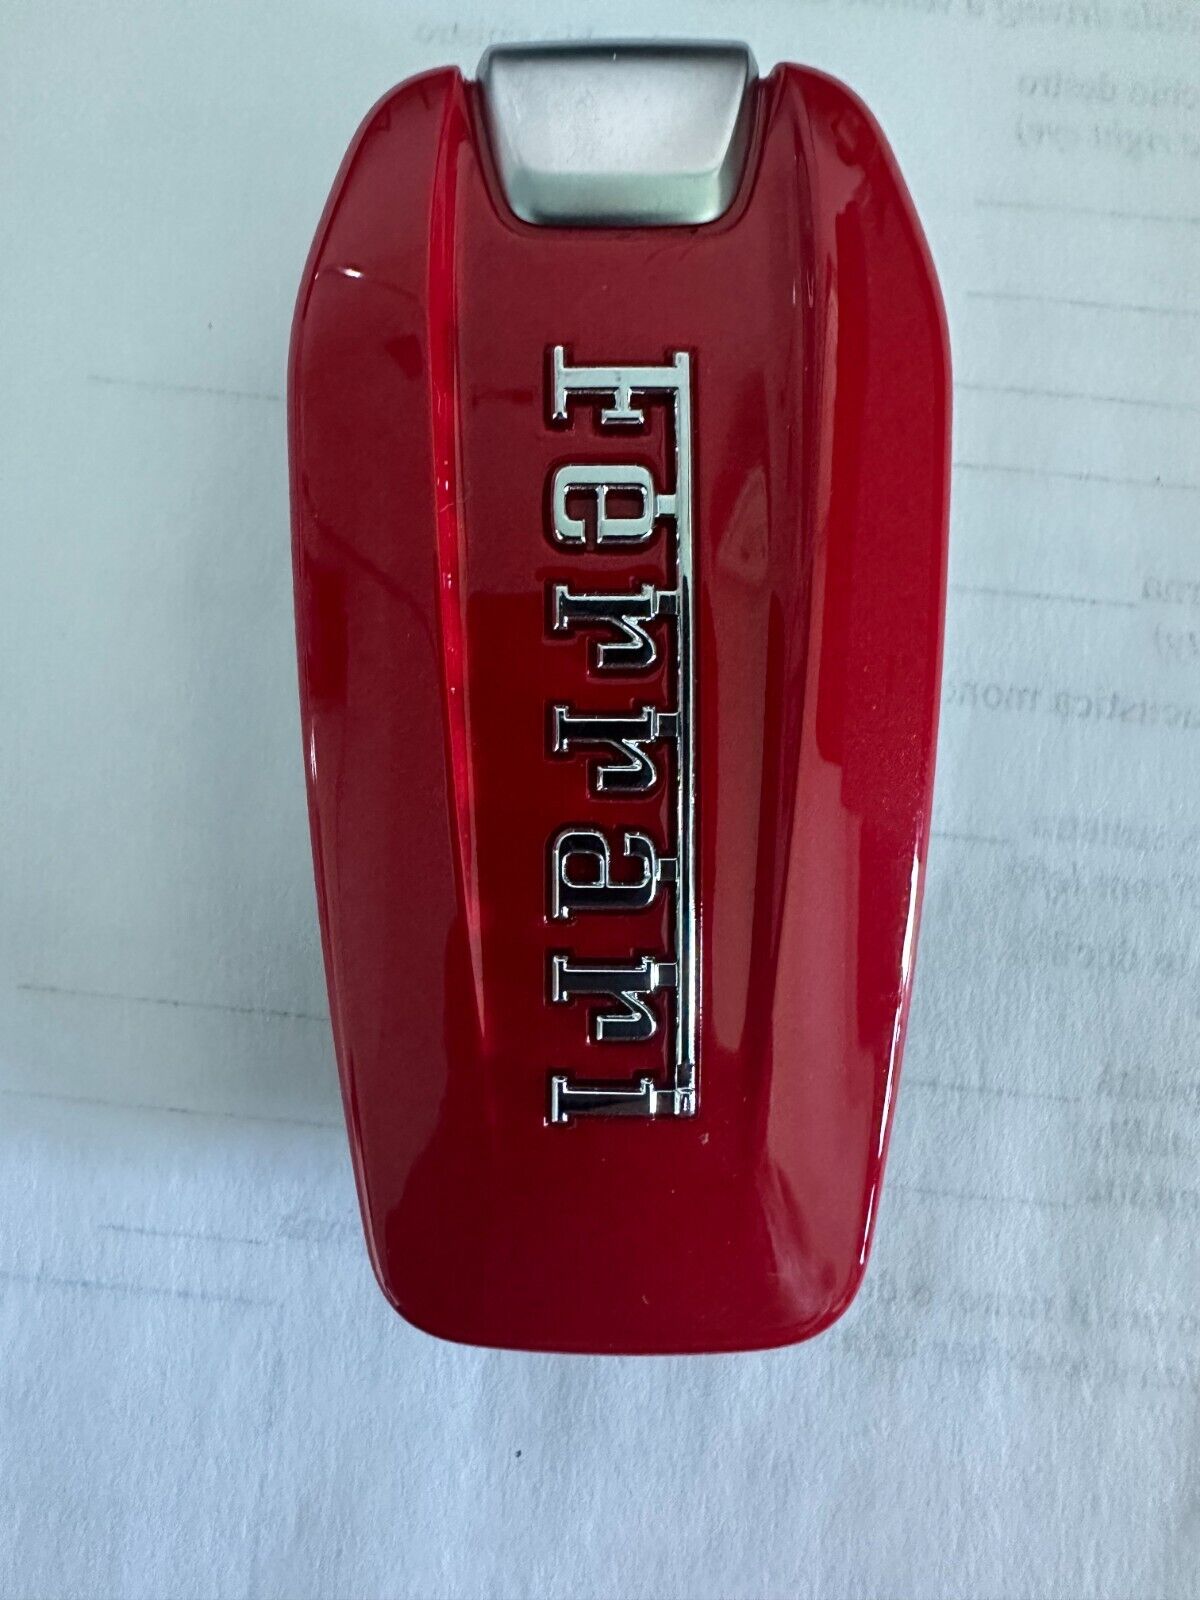 Ferrari New Original Key Remote for PortofinoM, Portofino, 488,  etc 